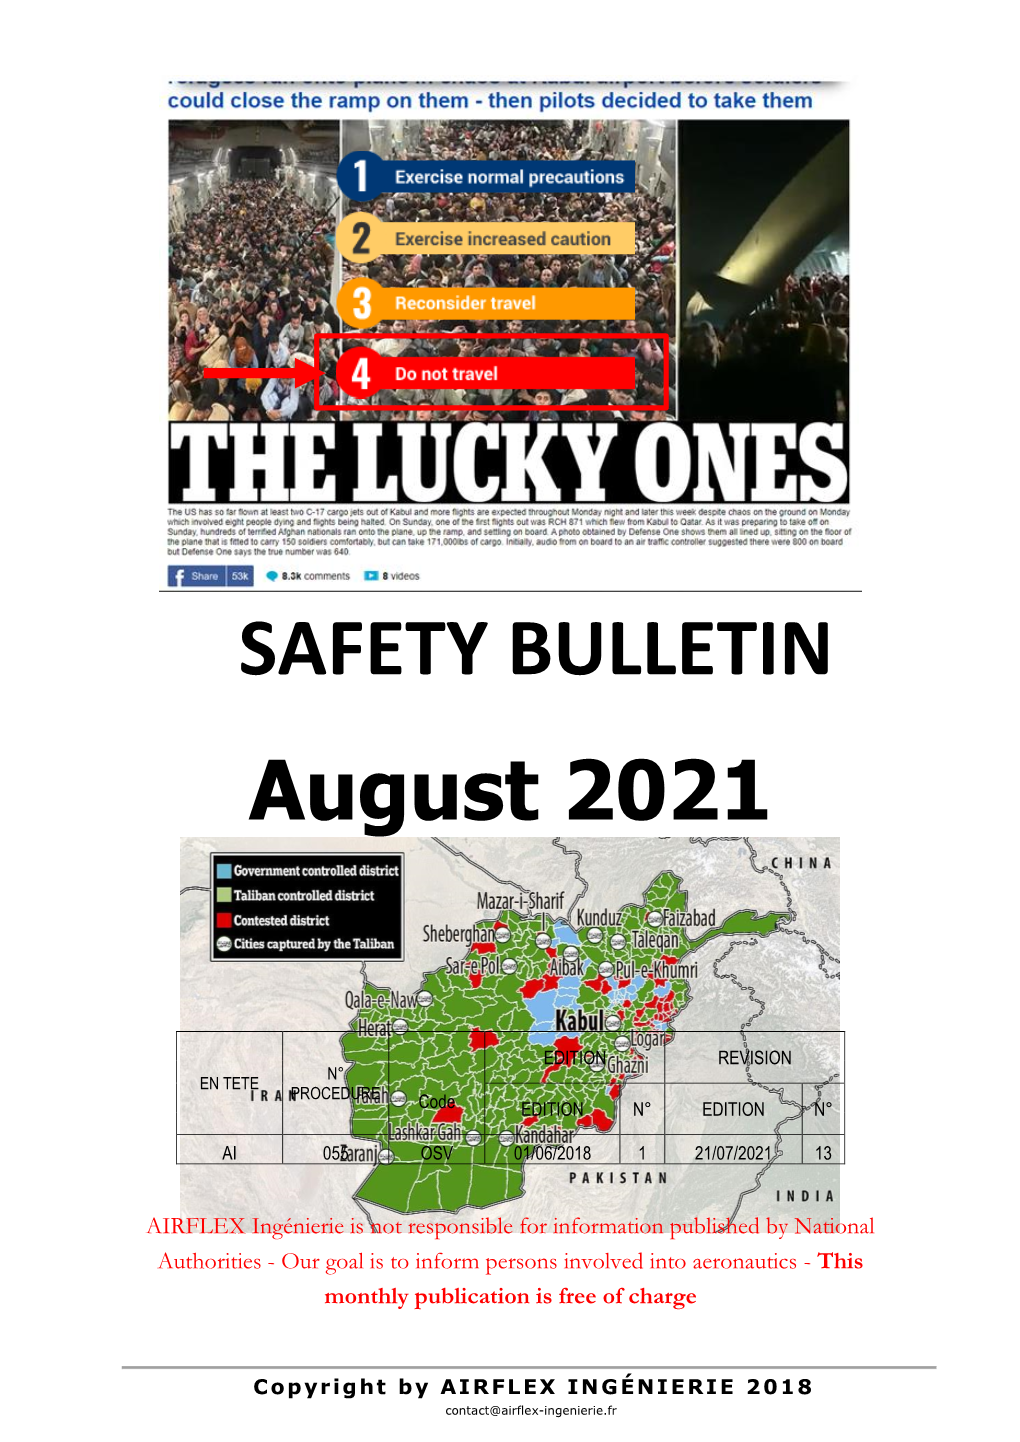 SAFETY BULLETIN August 2021